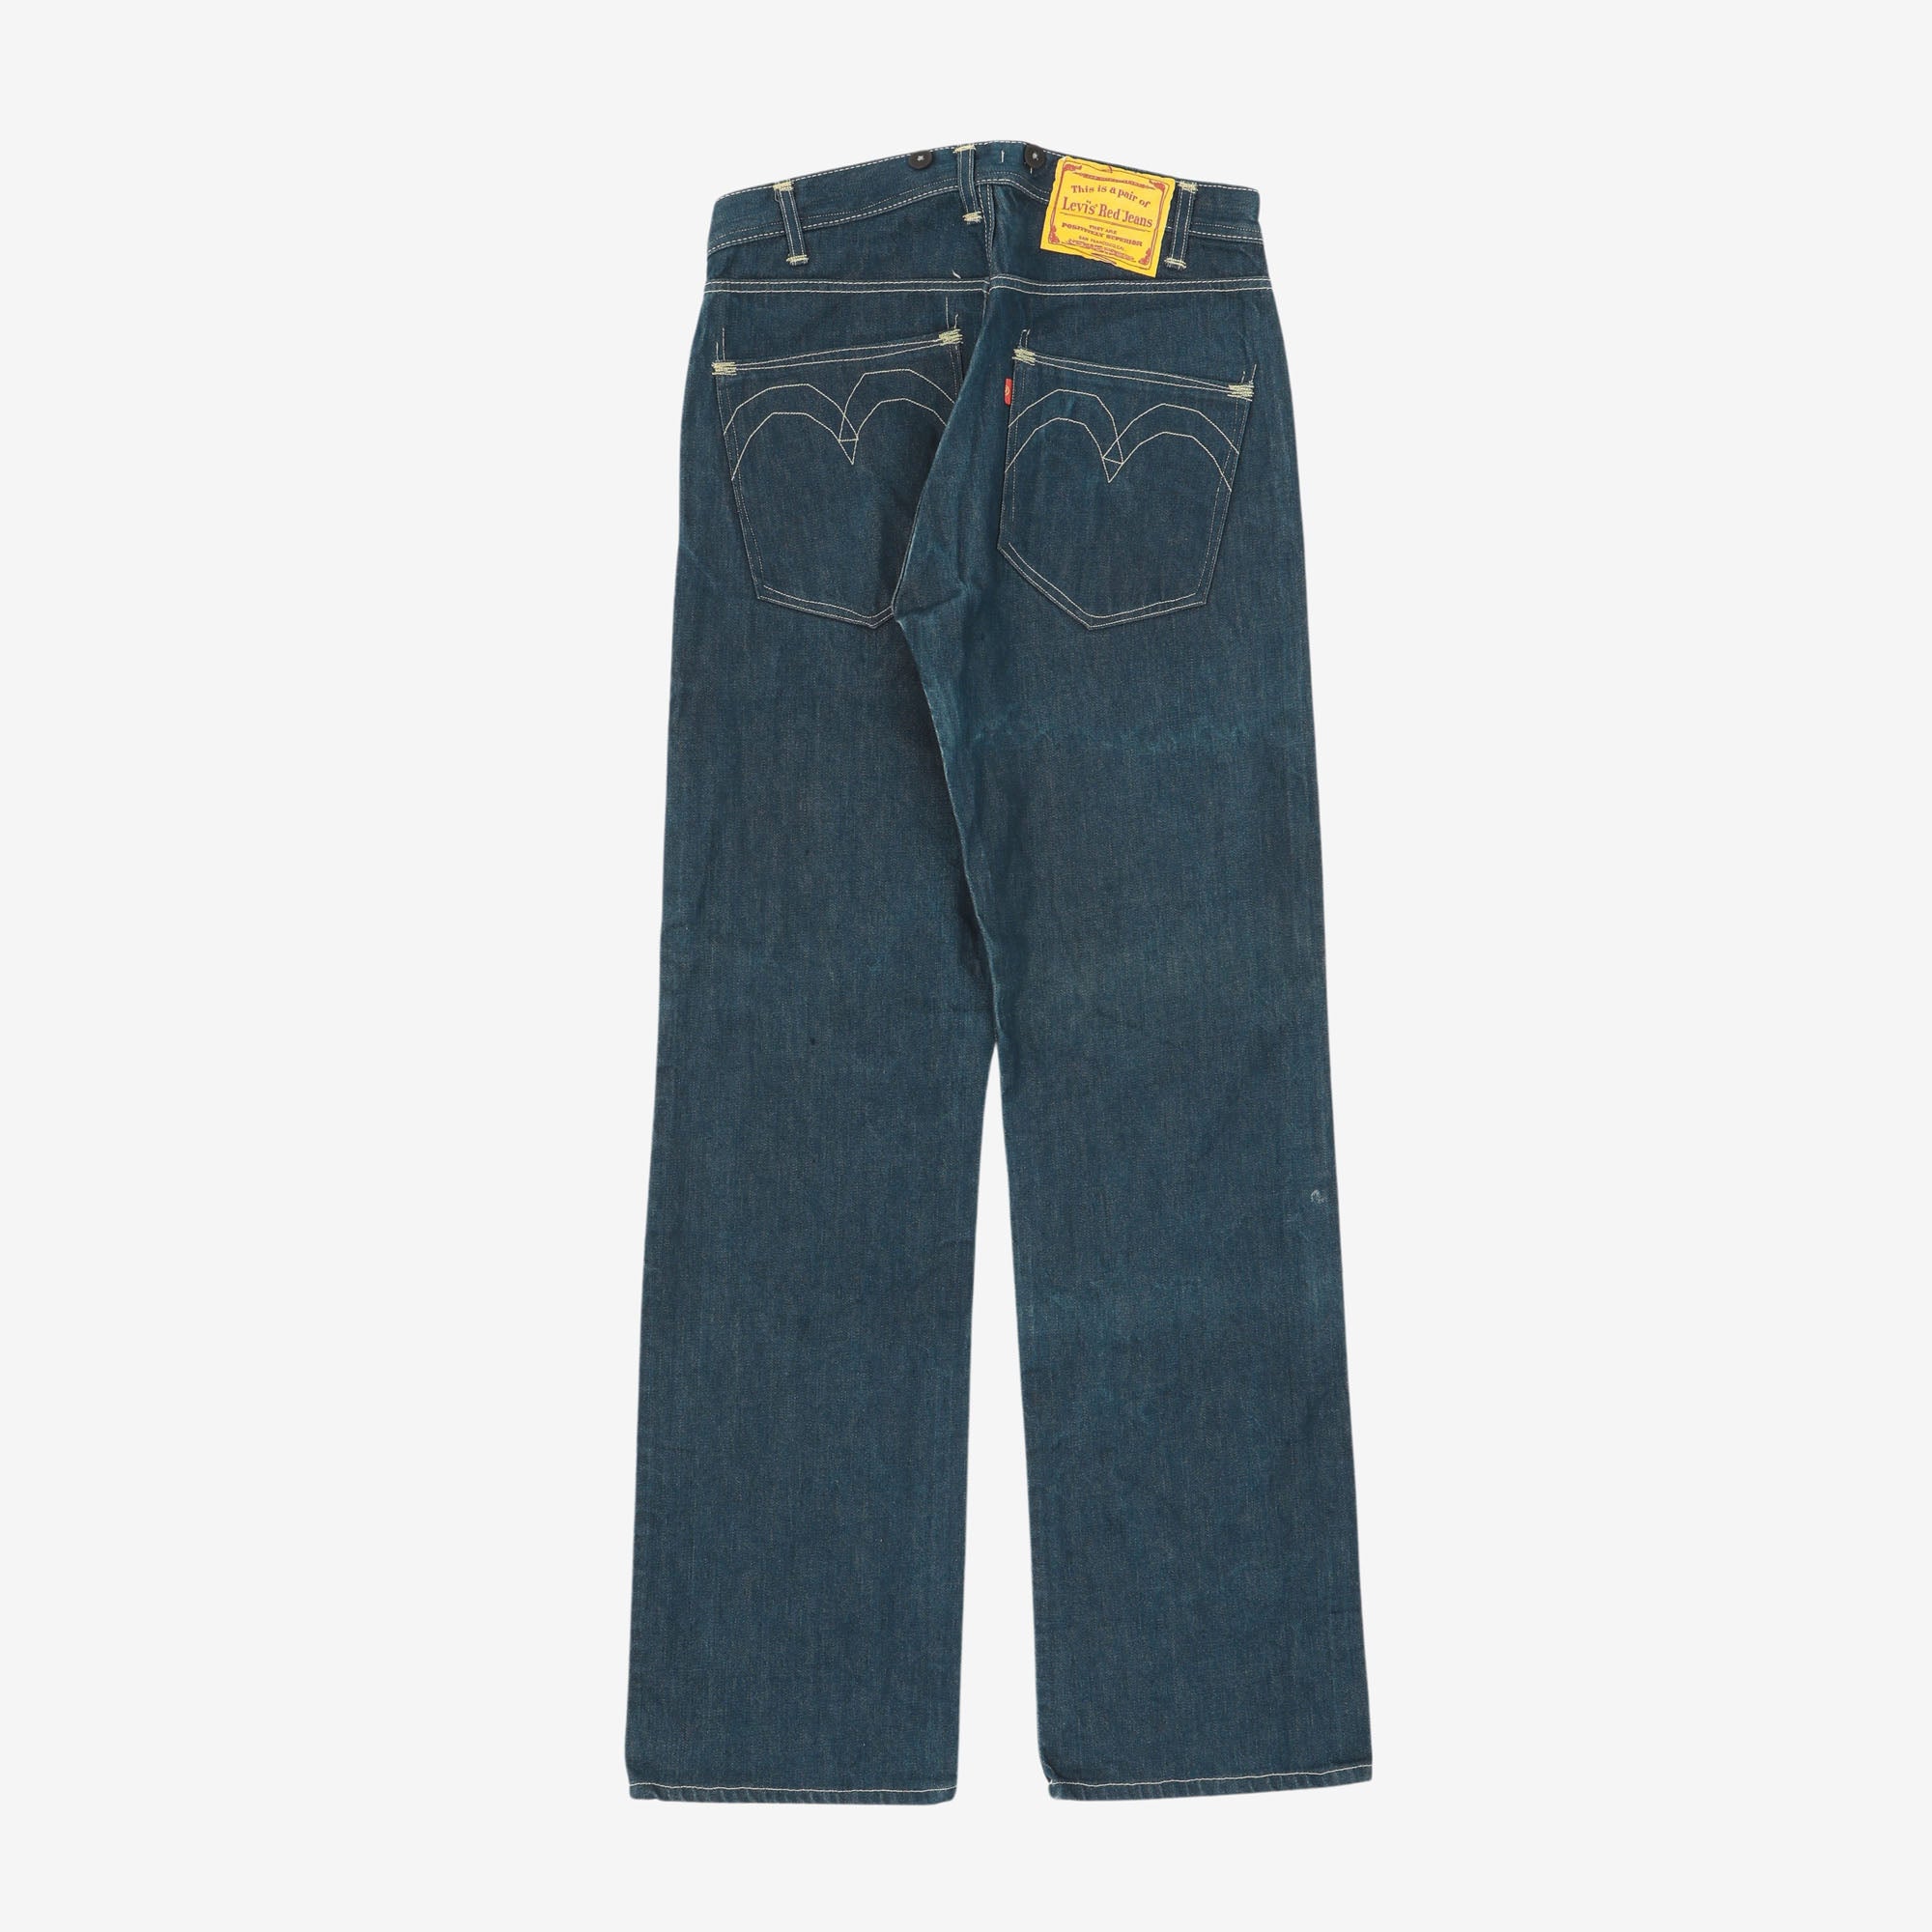 Denim Jeans (32 x 33.5)